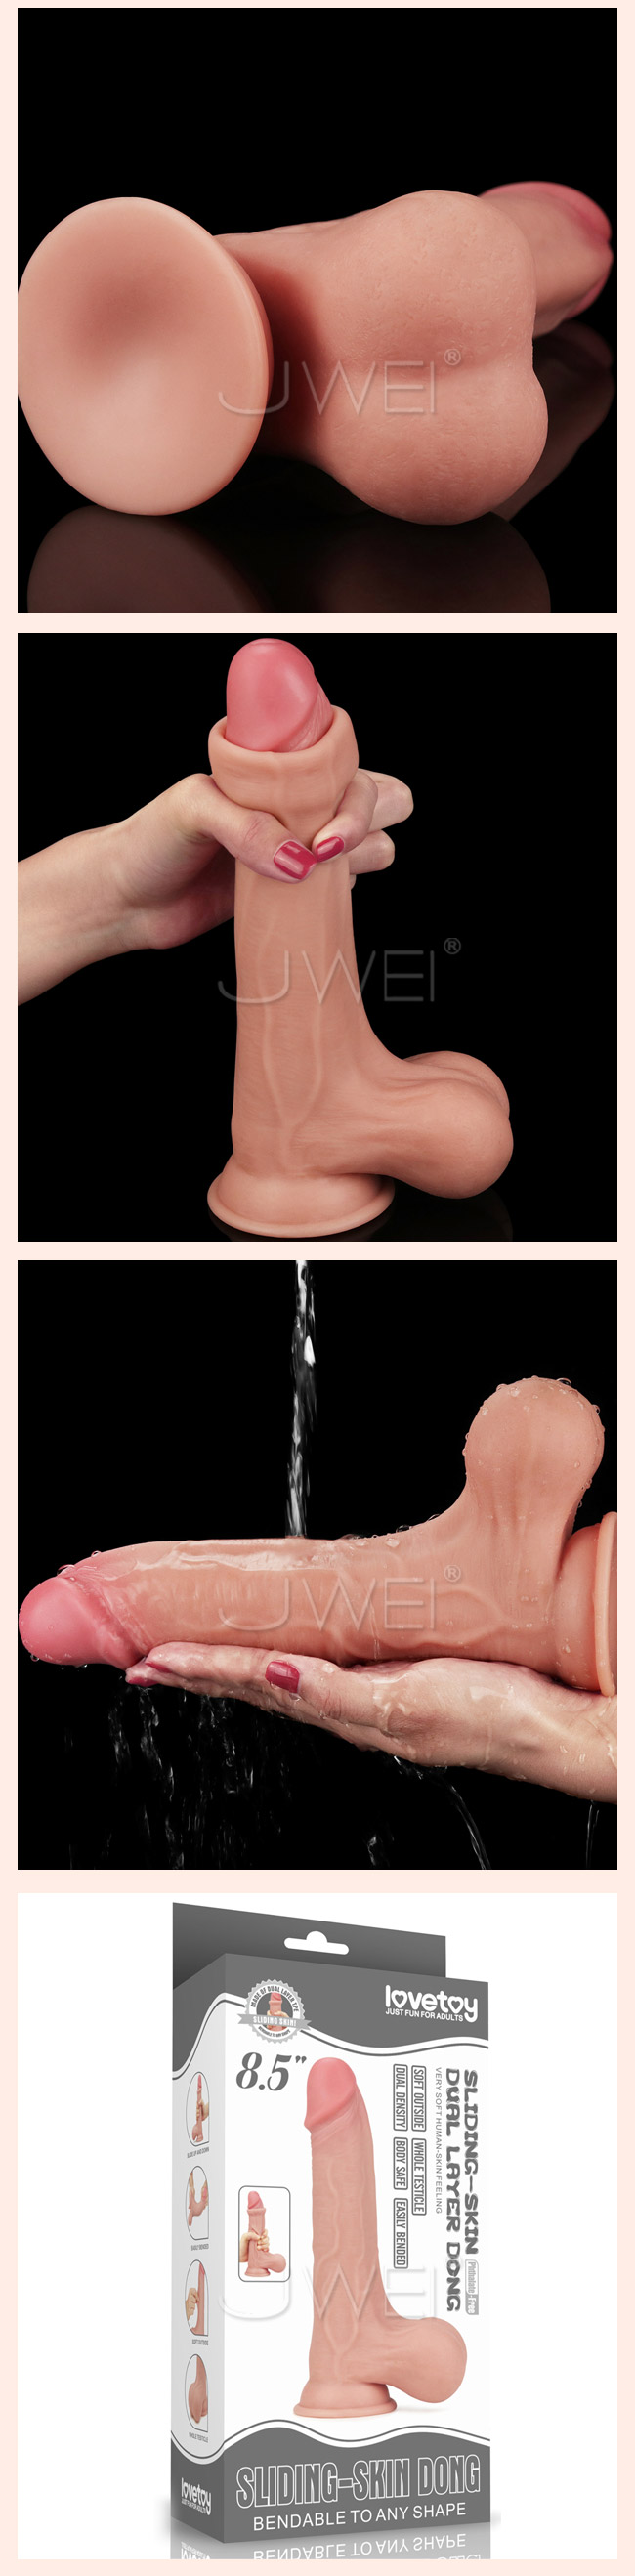 Lovetoy．8.5吋 超真實滑動肌感雙層材質吸盤仿真按摩棒-Whole Testicle